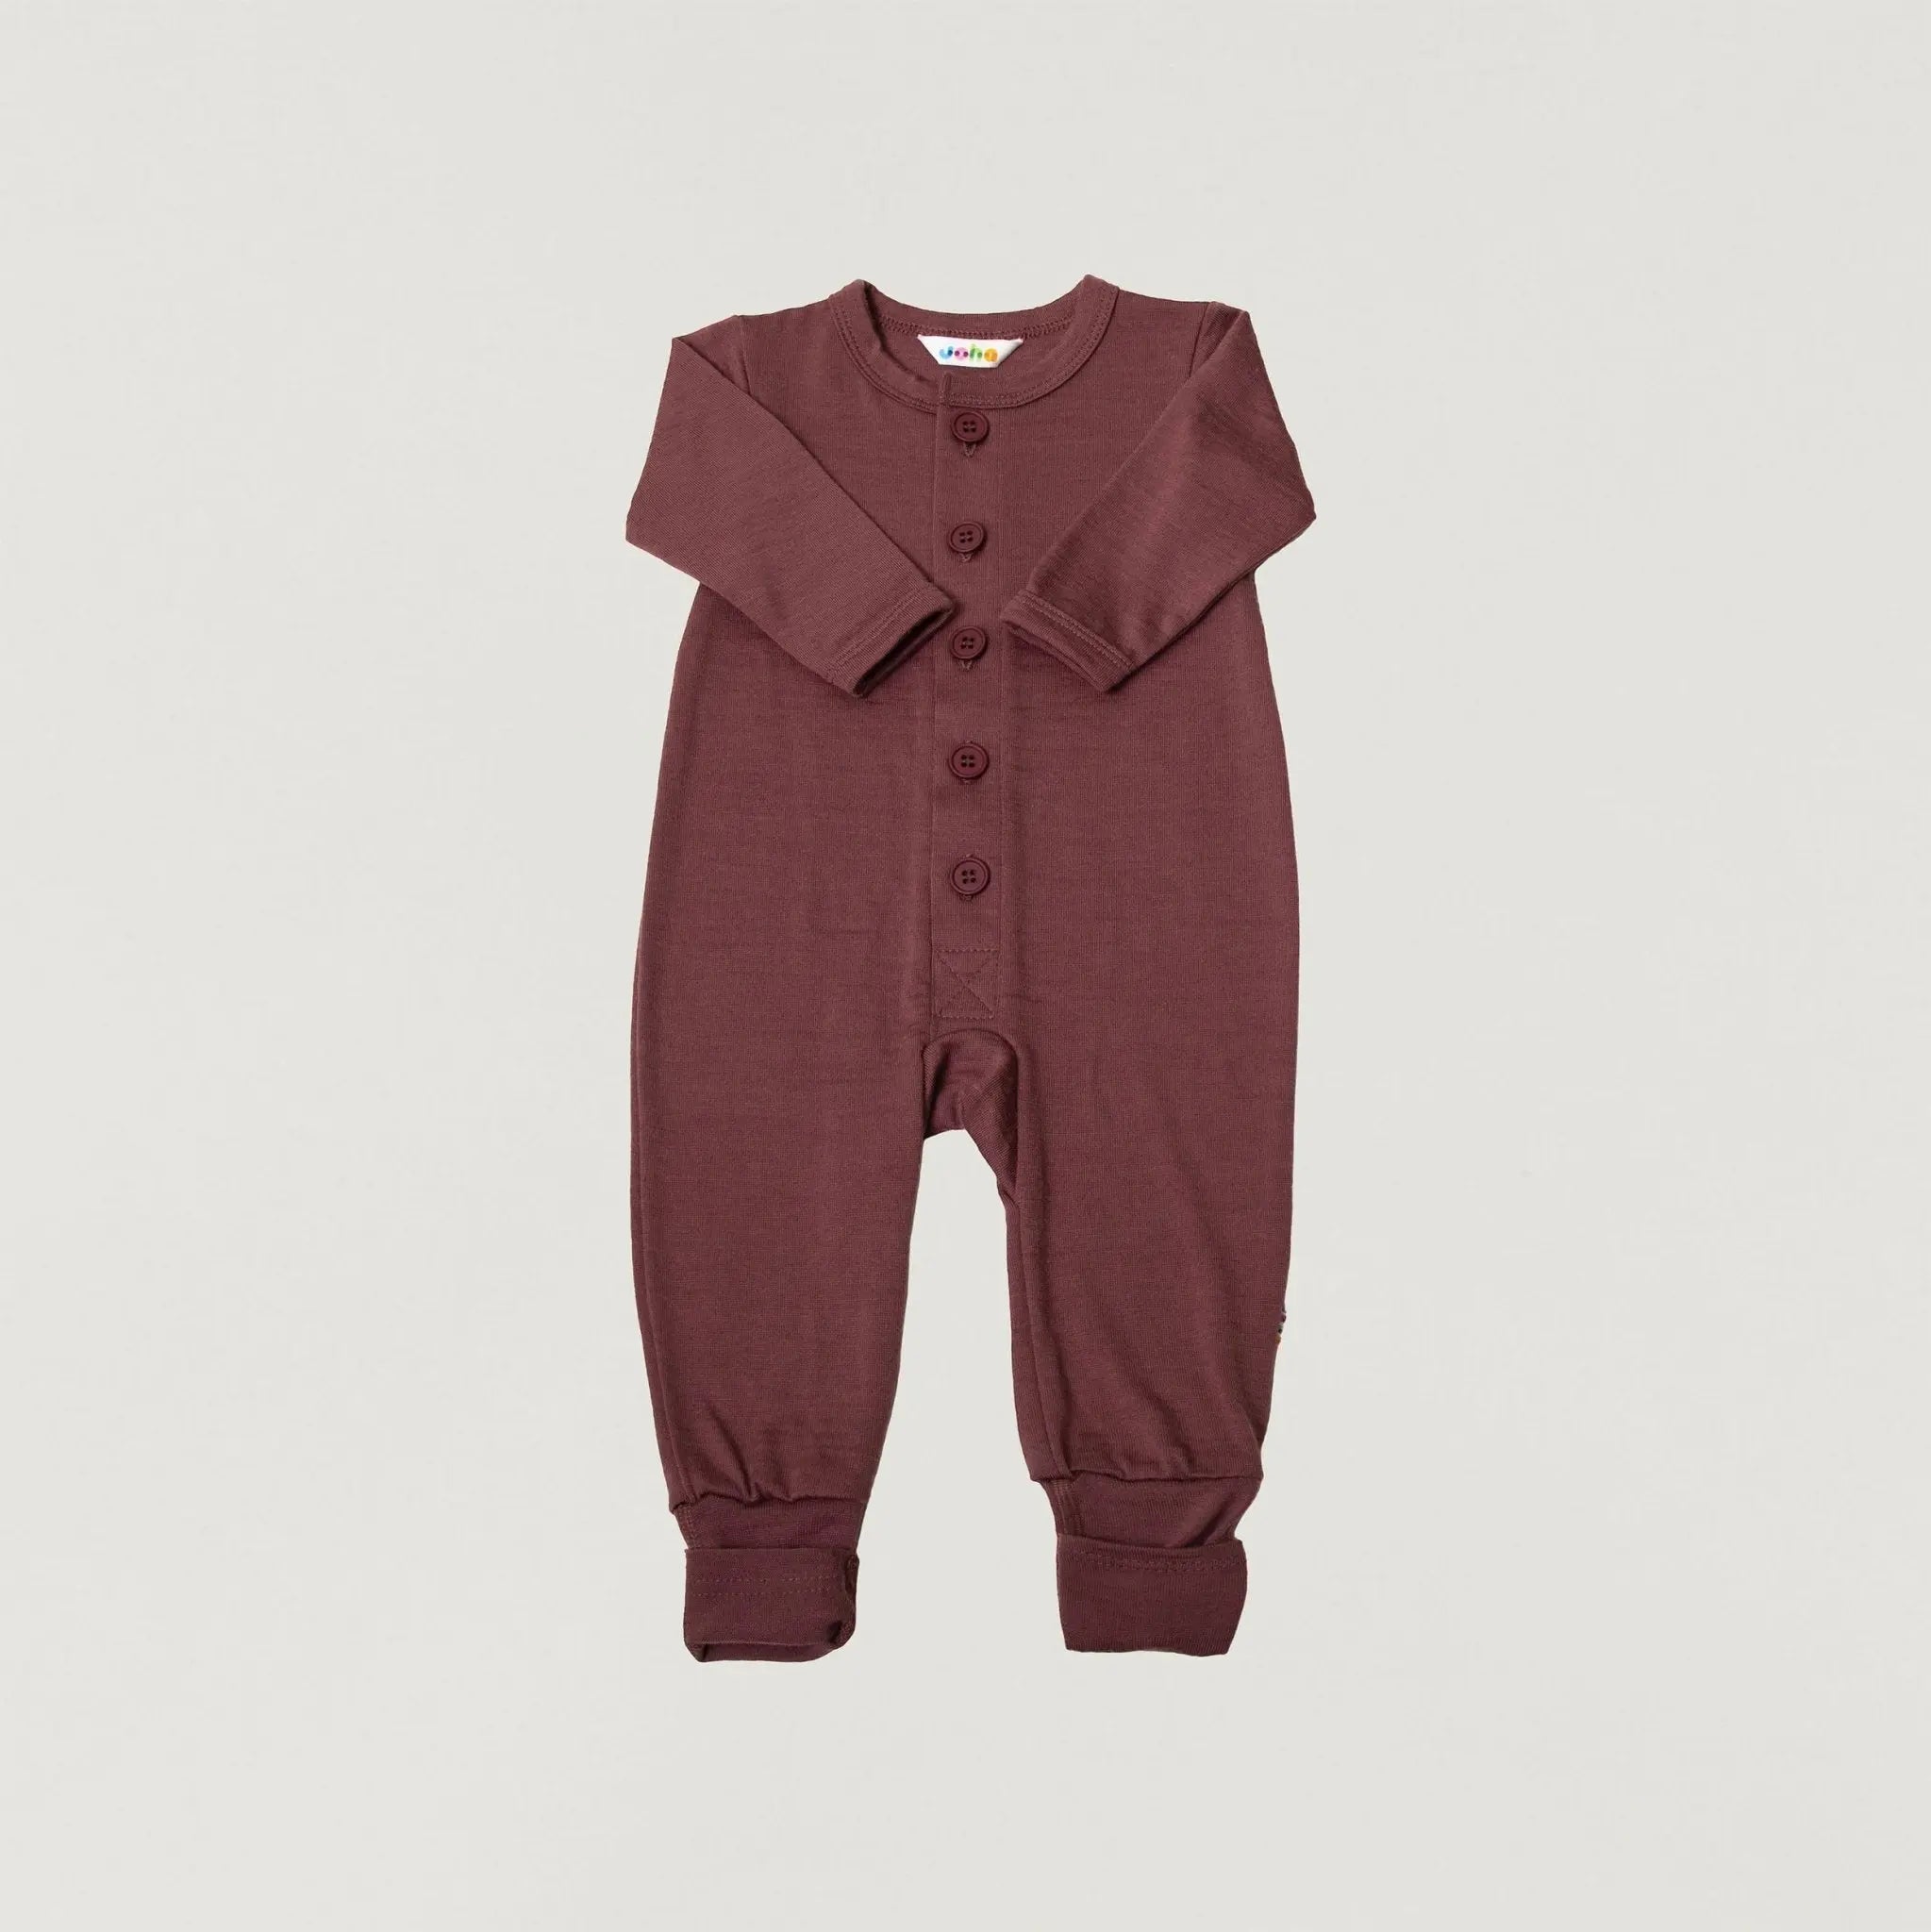 Babybox and Family Joha Pyjama aus Wolle in Herbsttönen 56/62 pflaume-jh #farbe_56/62